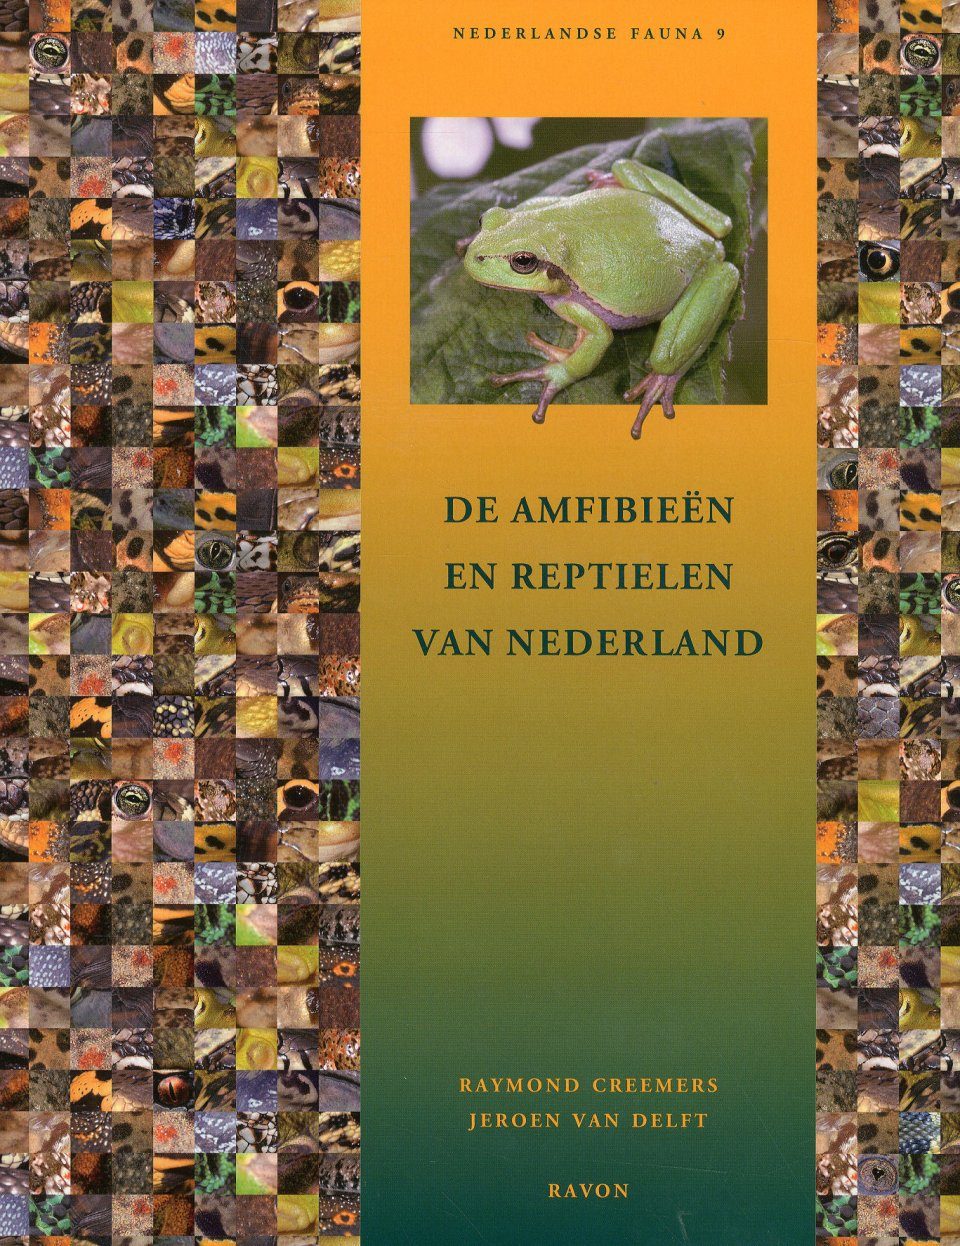 De Amfibieën en Reptielen van Nederland [Amphibians and of the Netherlands] | NHBS Academic Professional Books